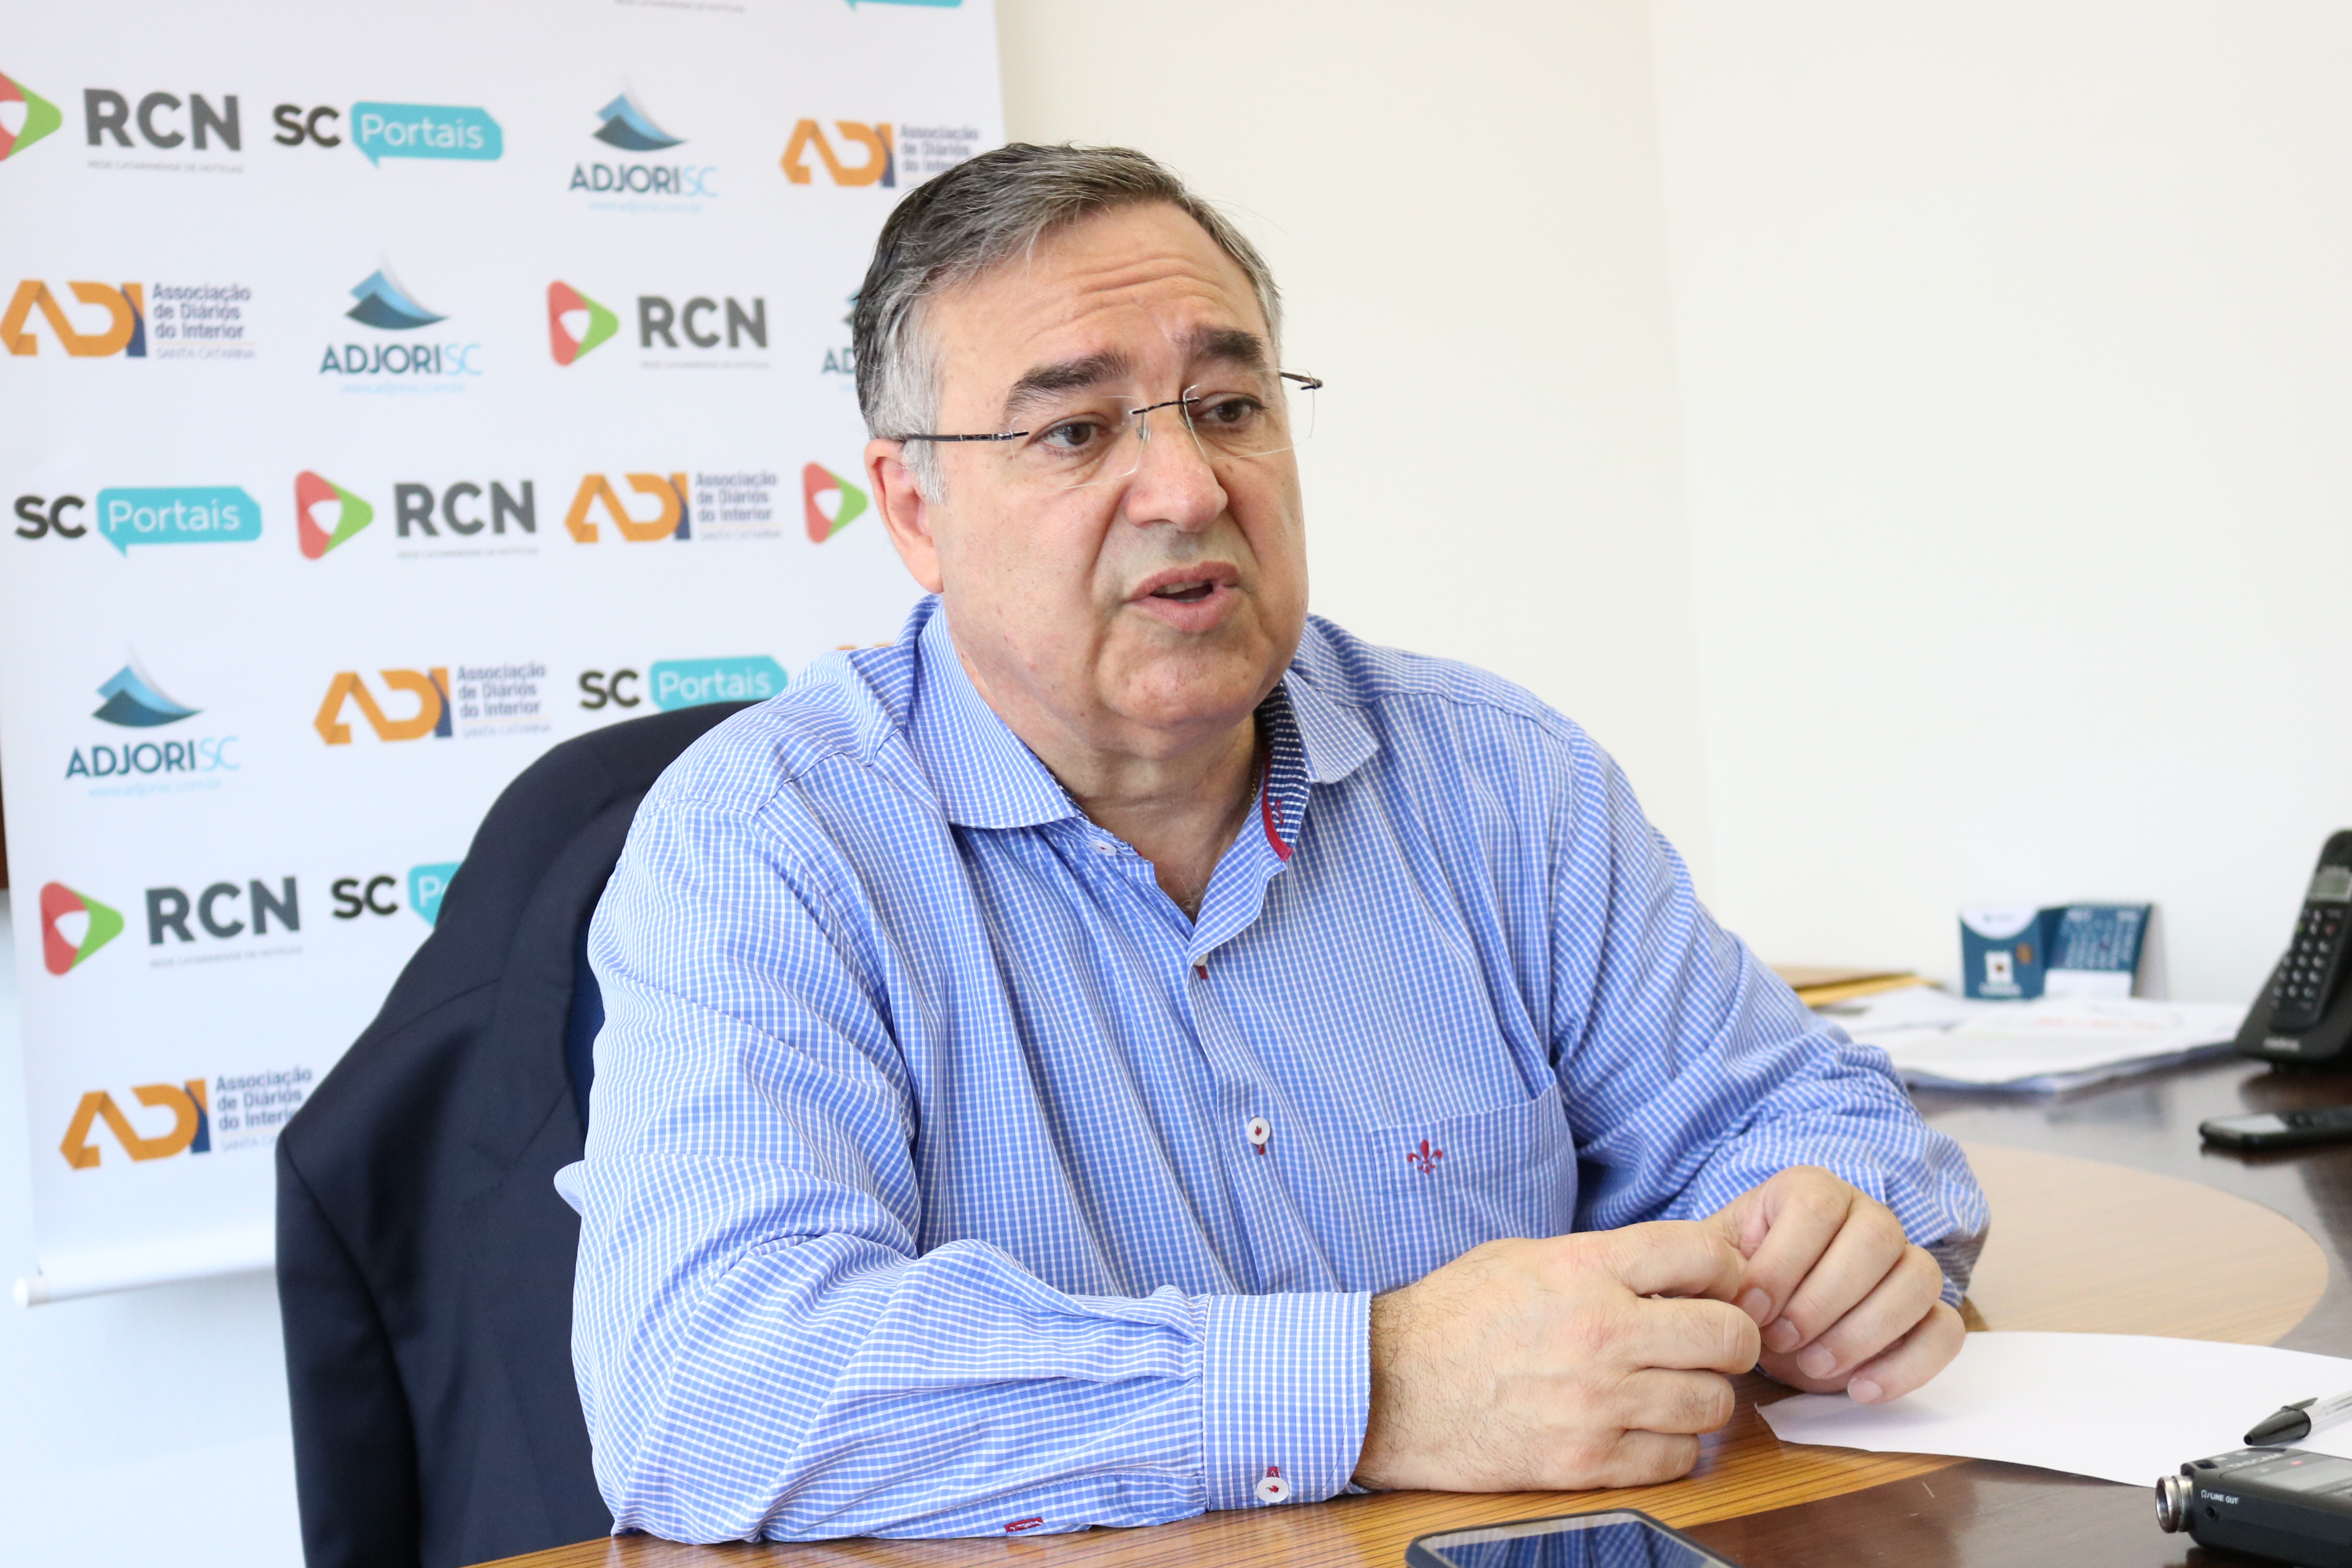 Entrevista Raimundo Colombo - PSD/SC: “Senado mais apto a reformas”